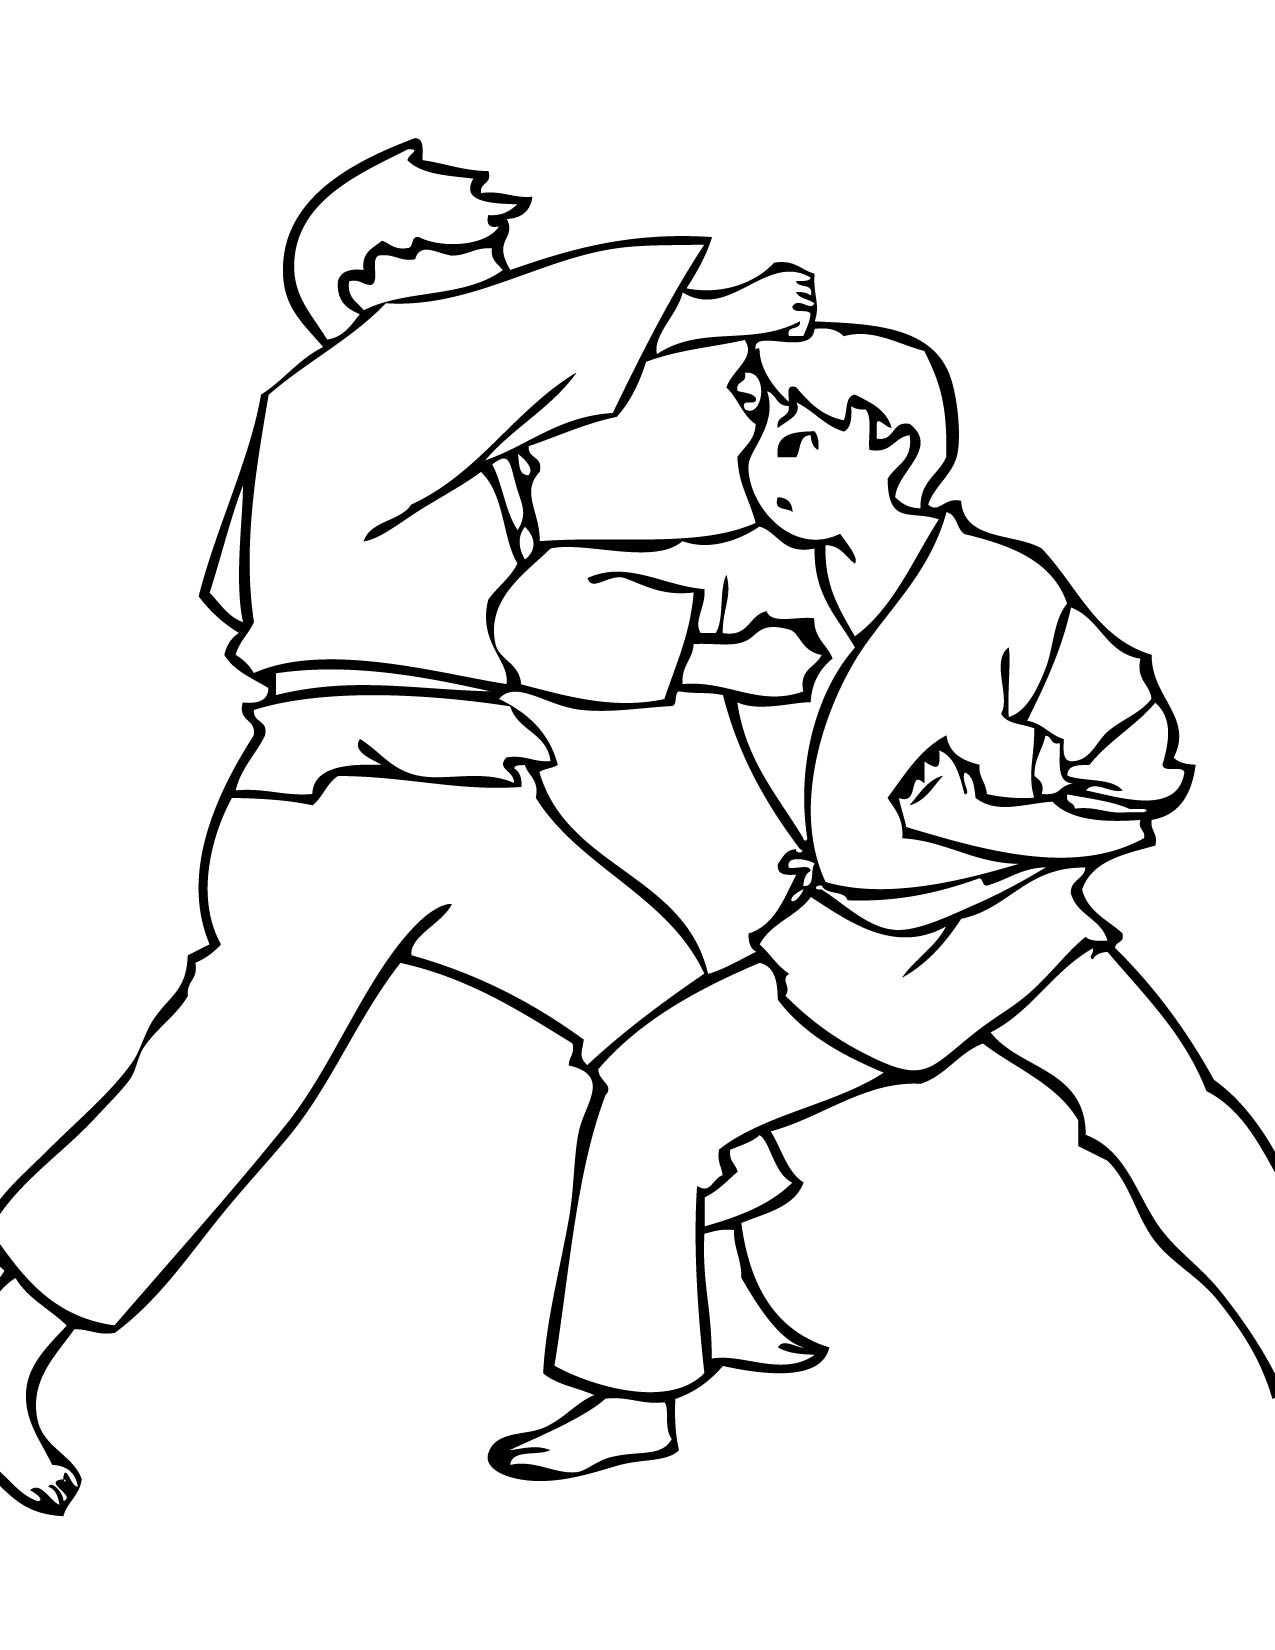 Karate Drawing at GetDrawings | Free download